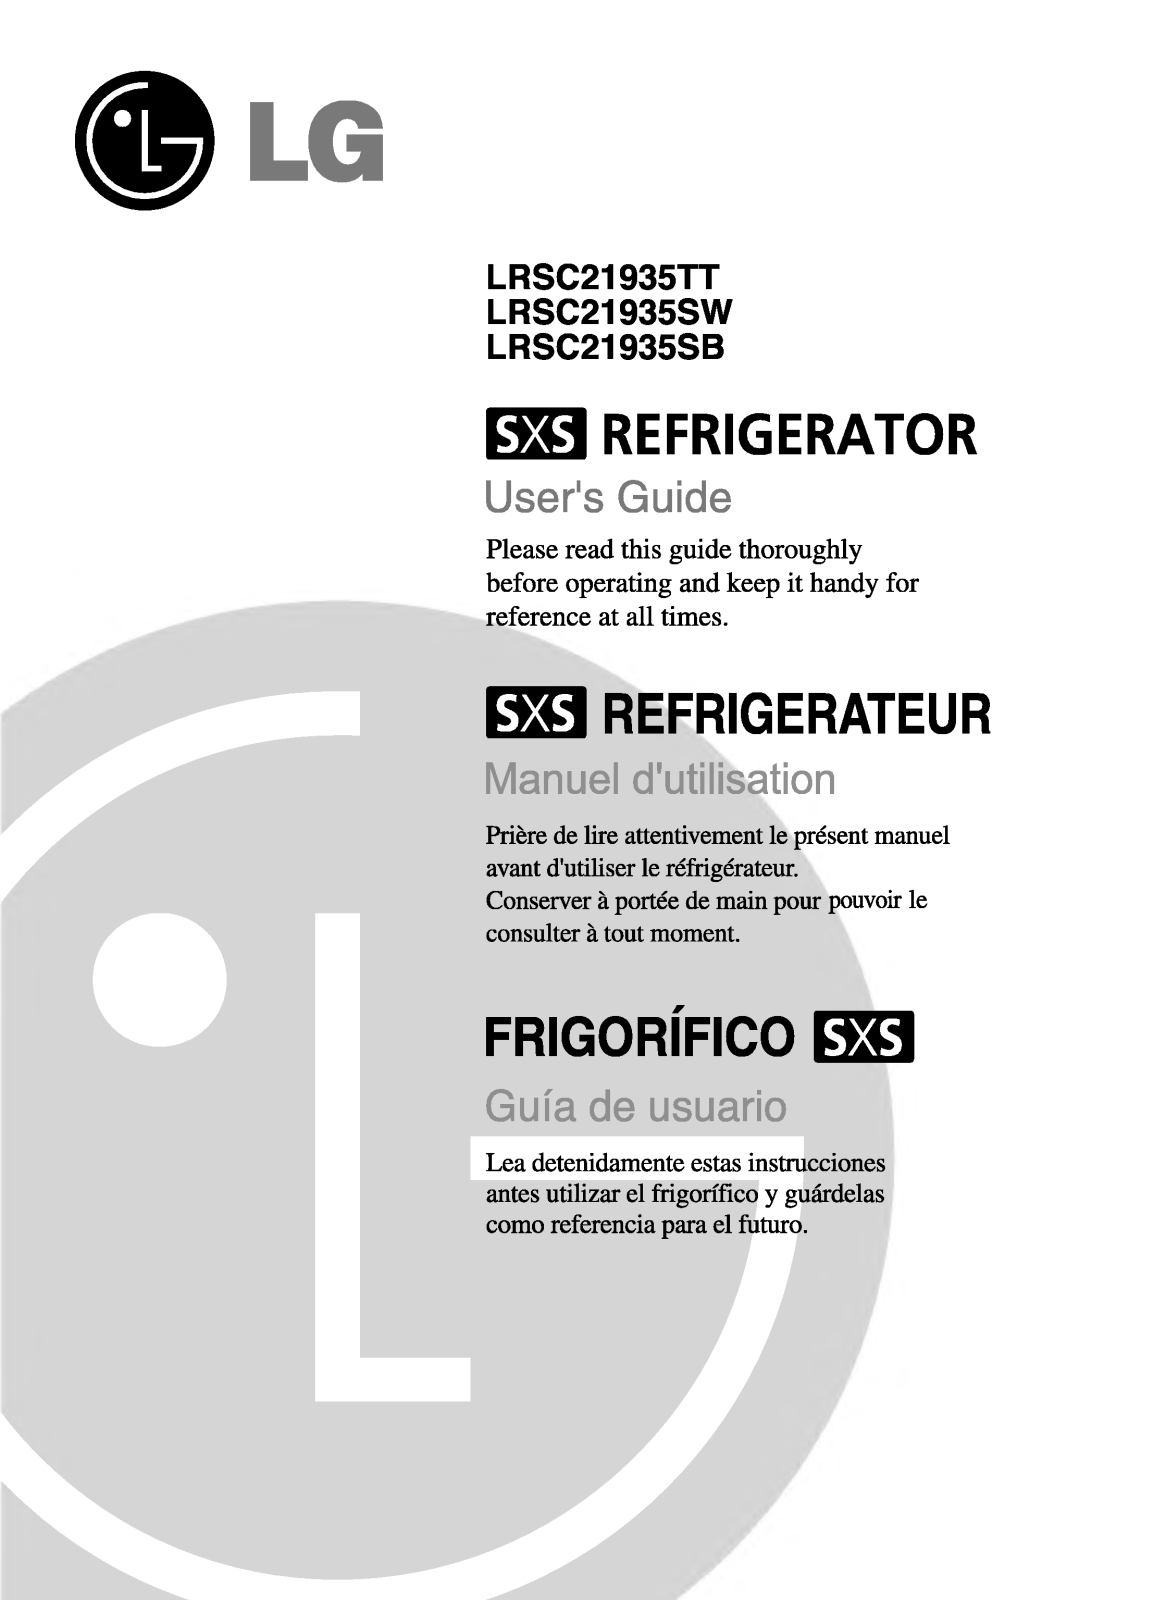 LG LRSC21935SB, LRSC21935SW, LRSC21935TT User Manual